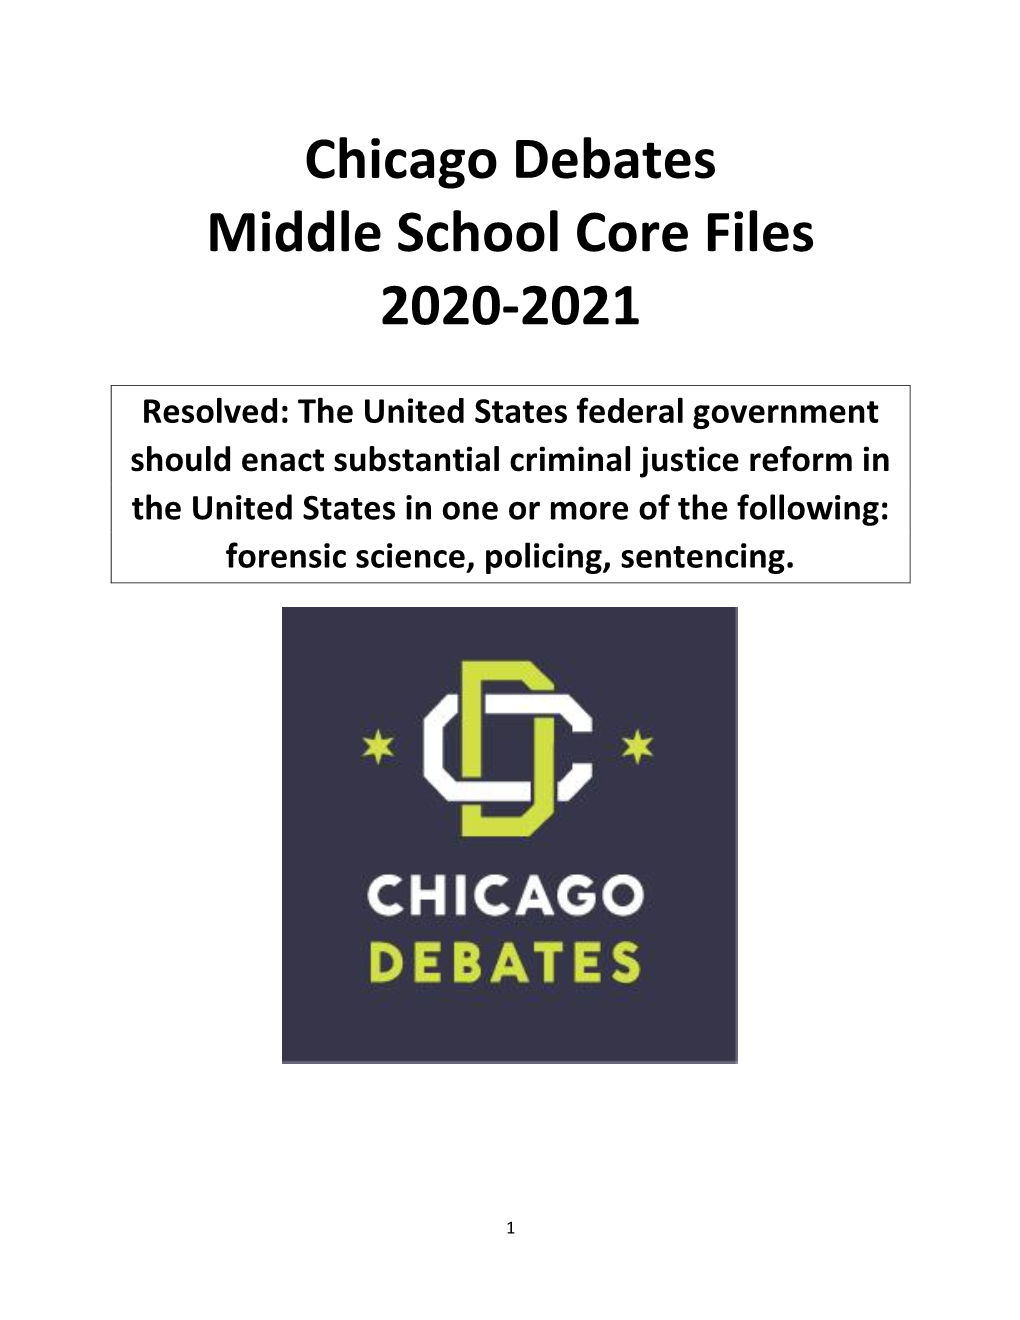 Chicago Debates Middle School Core Files 2020-2021